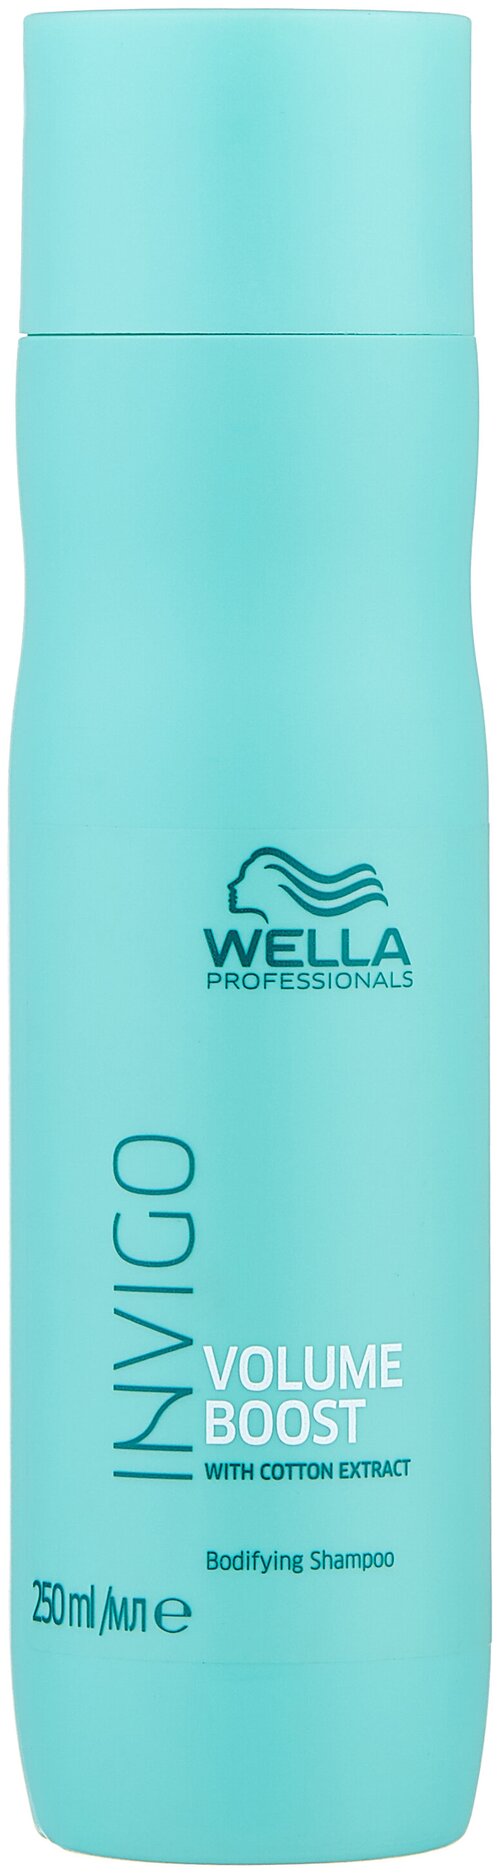 Wella Professionals шампунь Invigo Volume Boost для придания объема, 250 мл